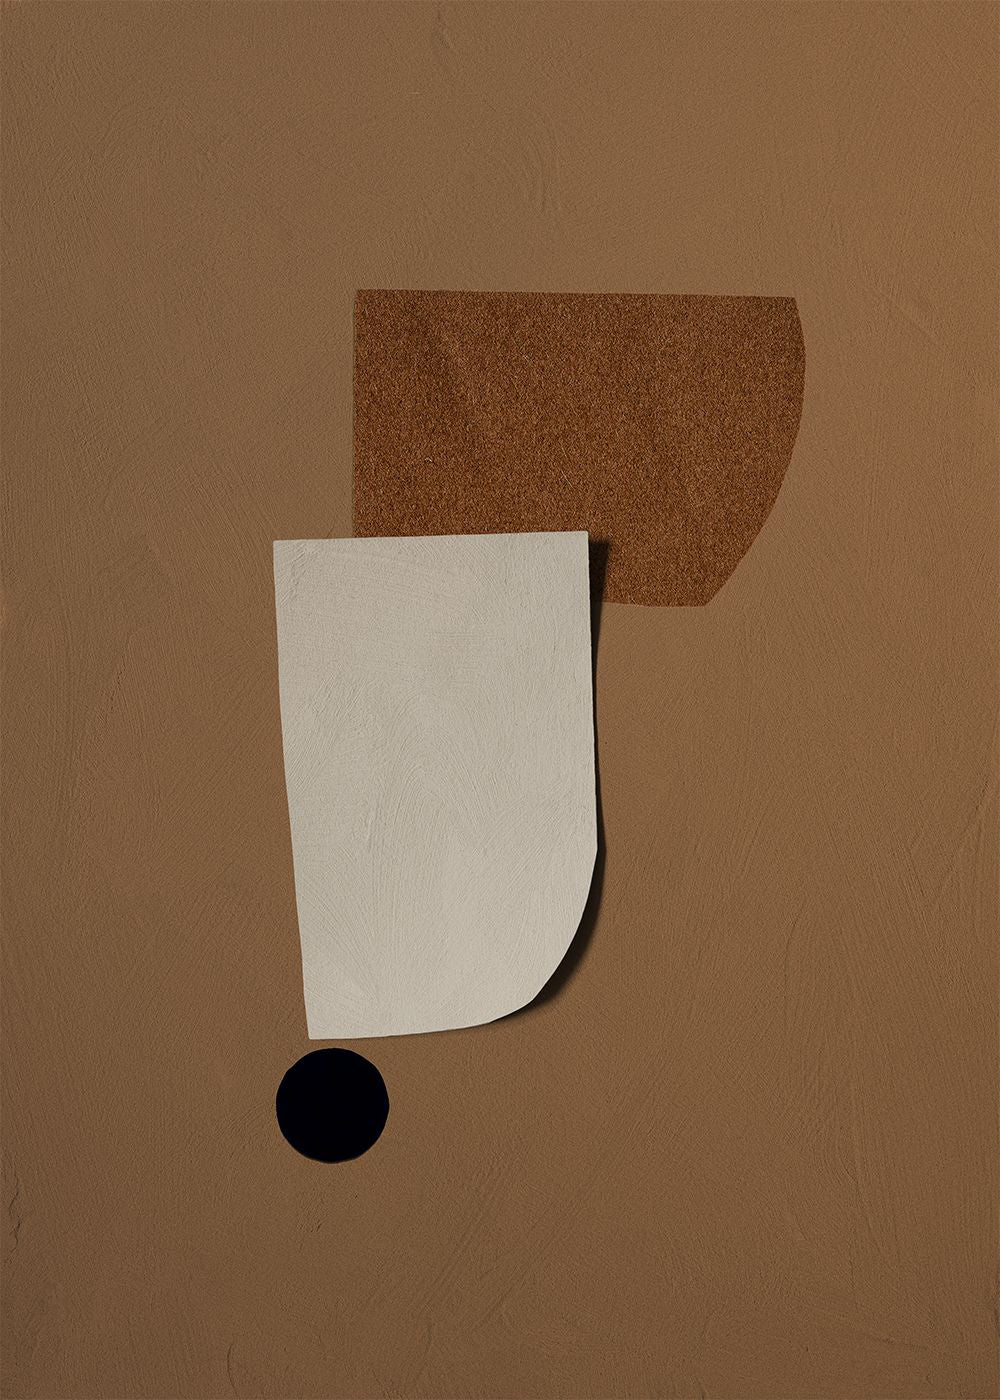 Paper Collective Tipppunkt 02 Poster, 50 x 70 cm